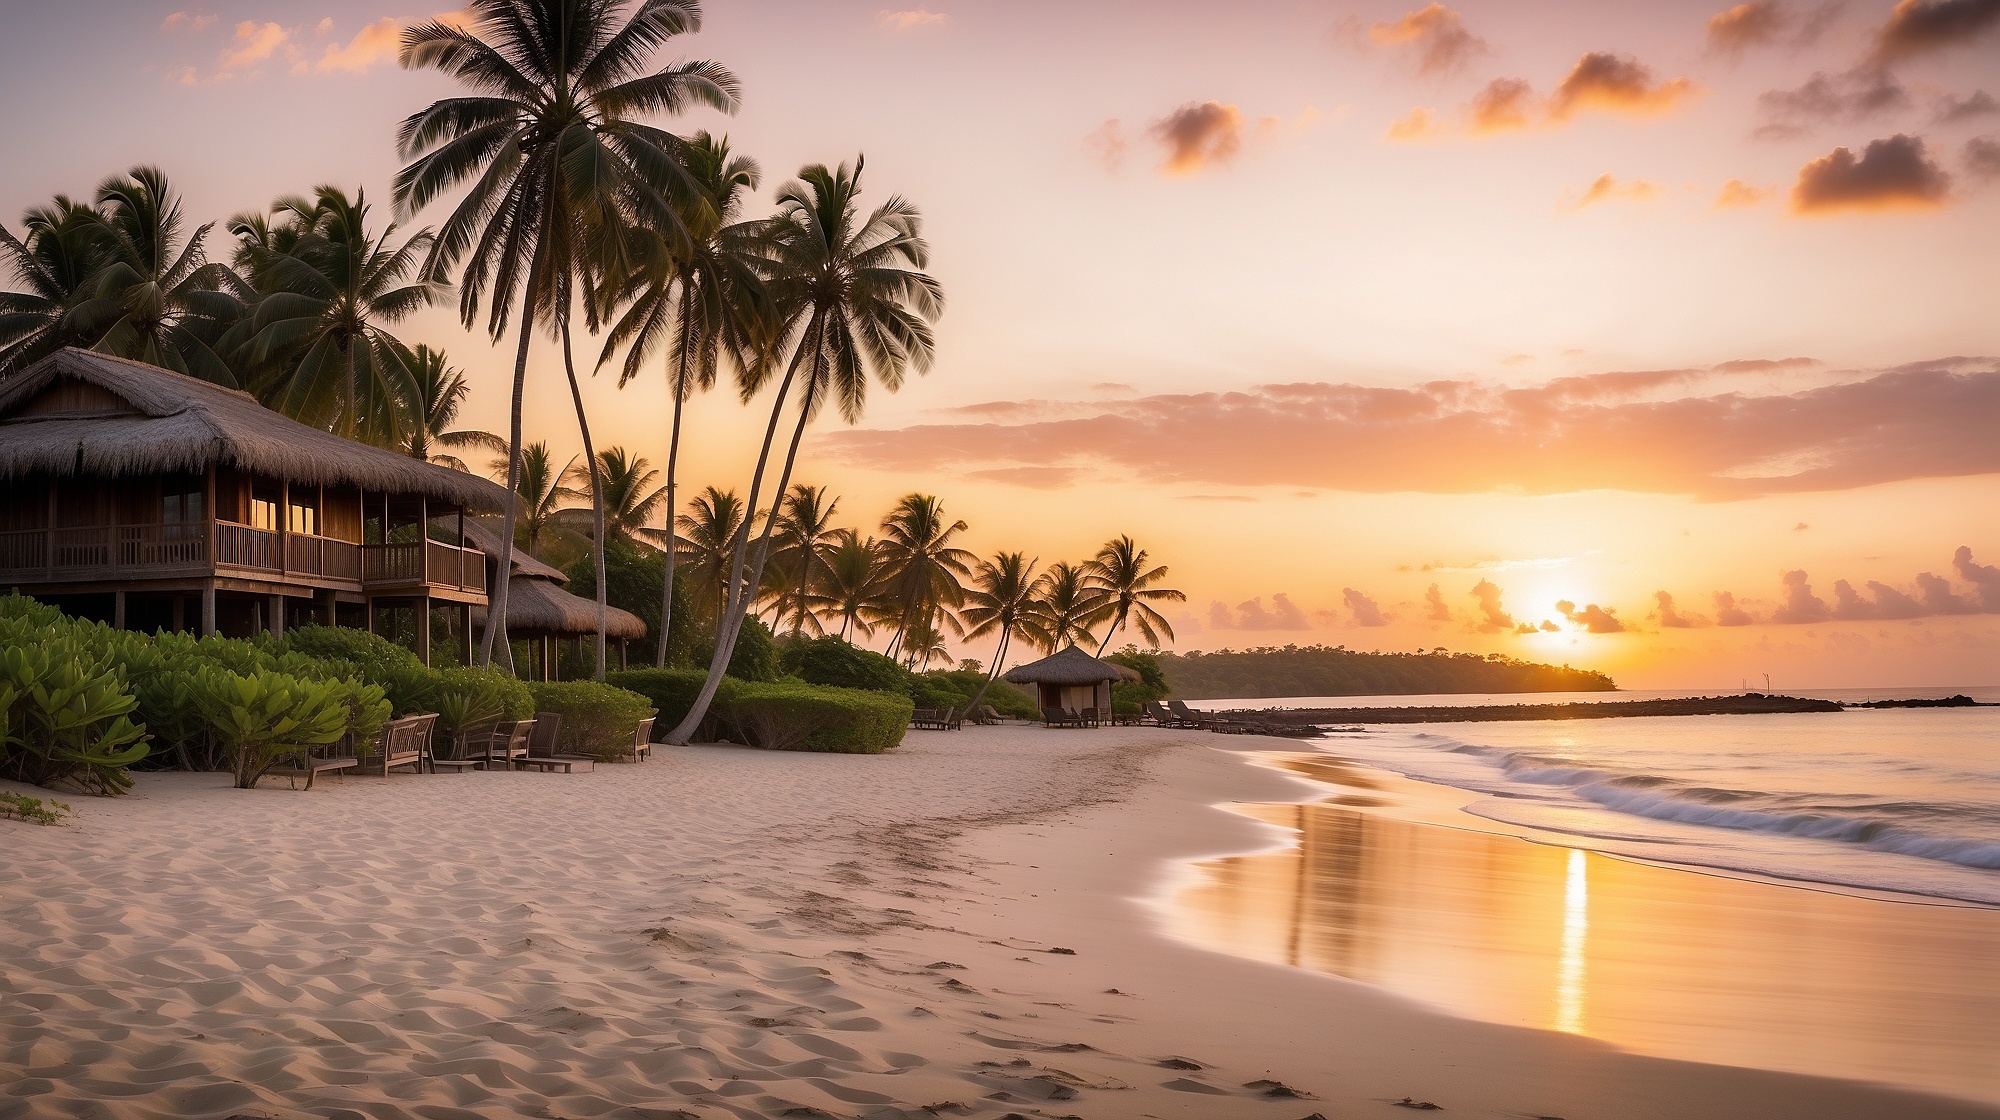 Sunset Beach Sun Rays 4K Coconuts House Sea Water Enjoying Palm Trees Sand Artwork Nature Abstract 2000x1120